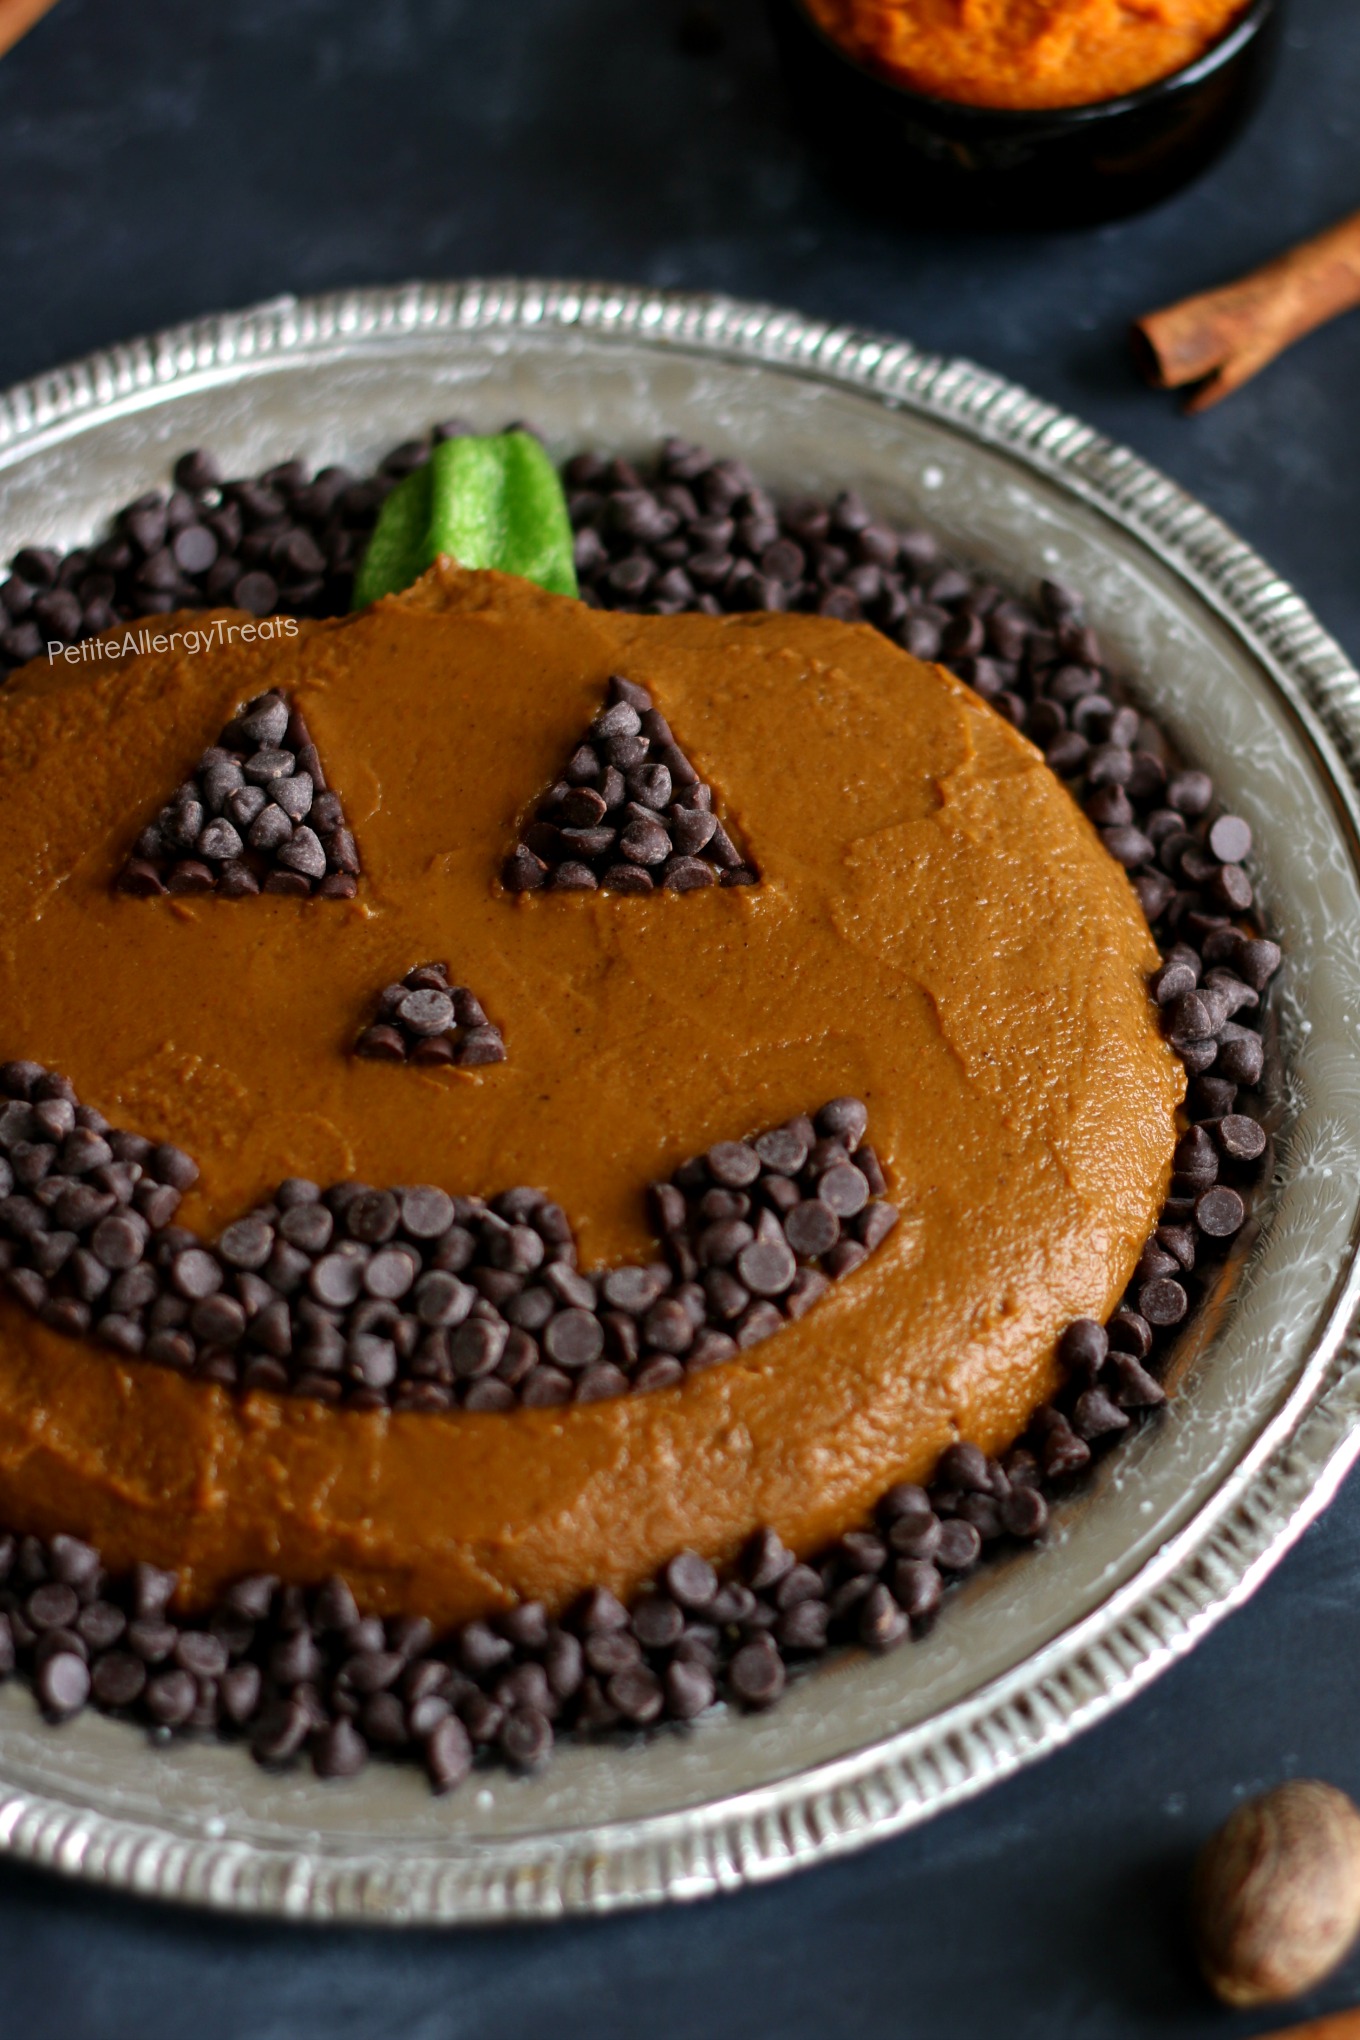 DIY Pumpkin Platter Dip Recipe (dairy free)- Adorable skinny pumpkin pie dip for Fall, Halloween or Autumn parties! Food Allergy friendly!